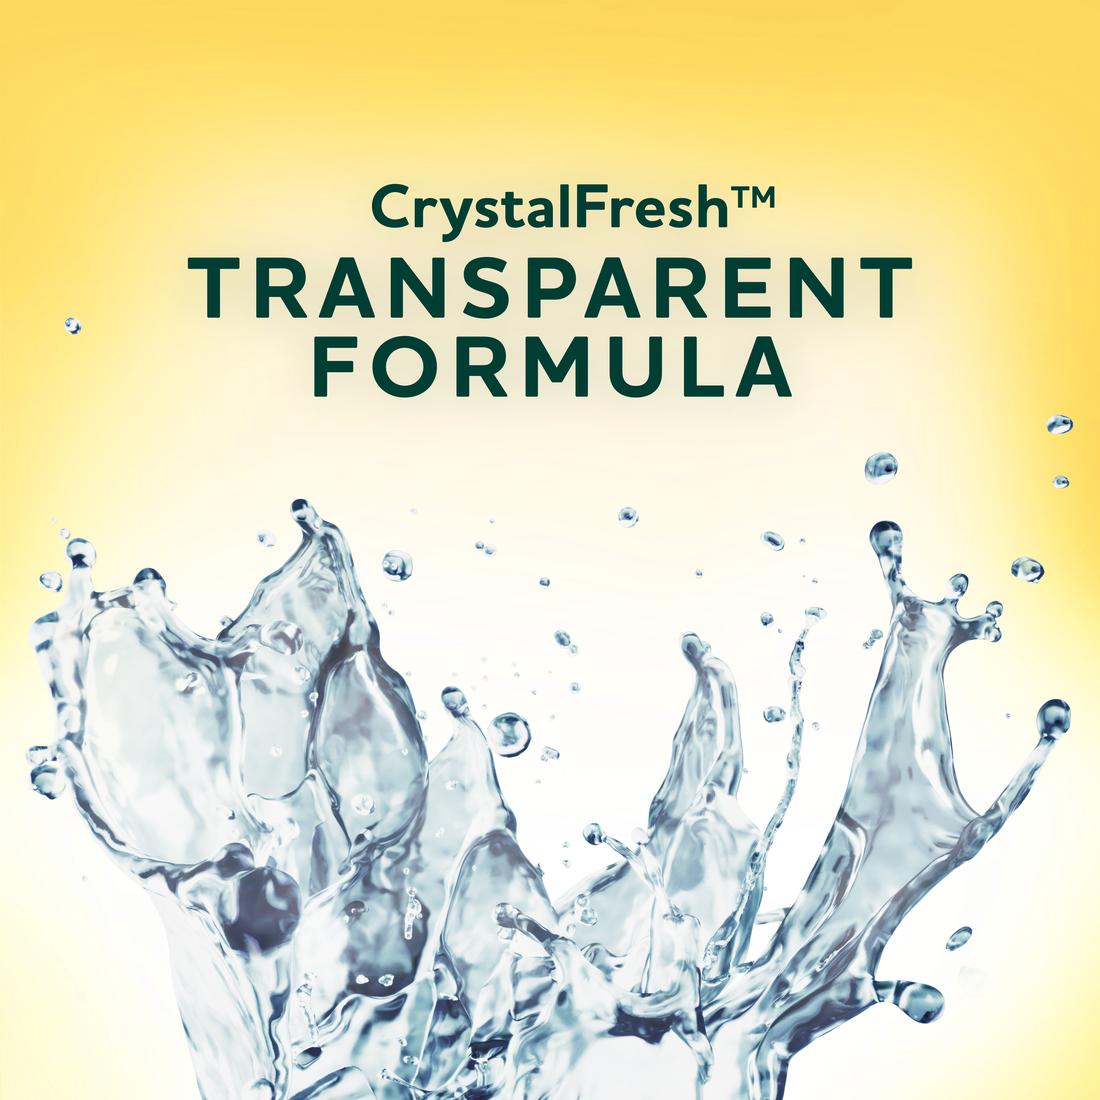 Crystal Fresh trademark
Transparent formula